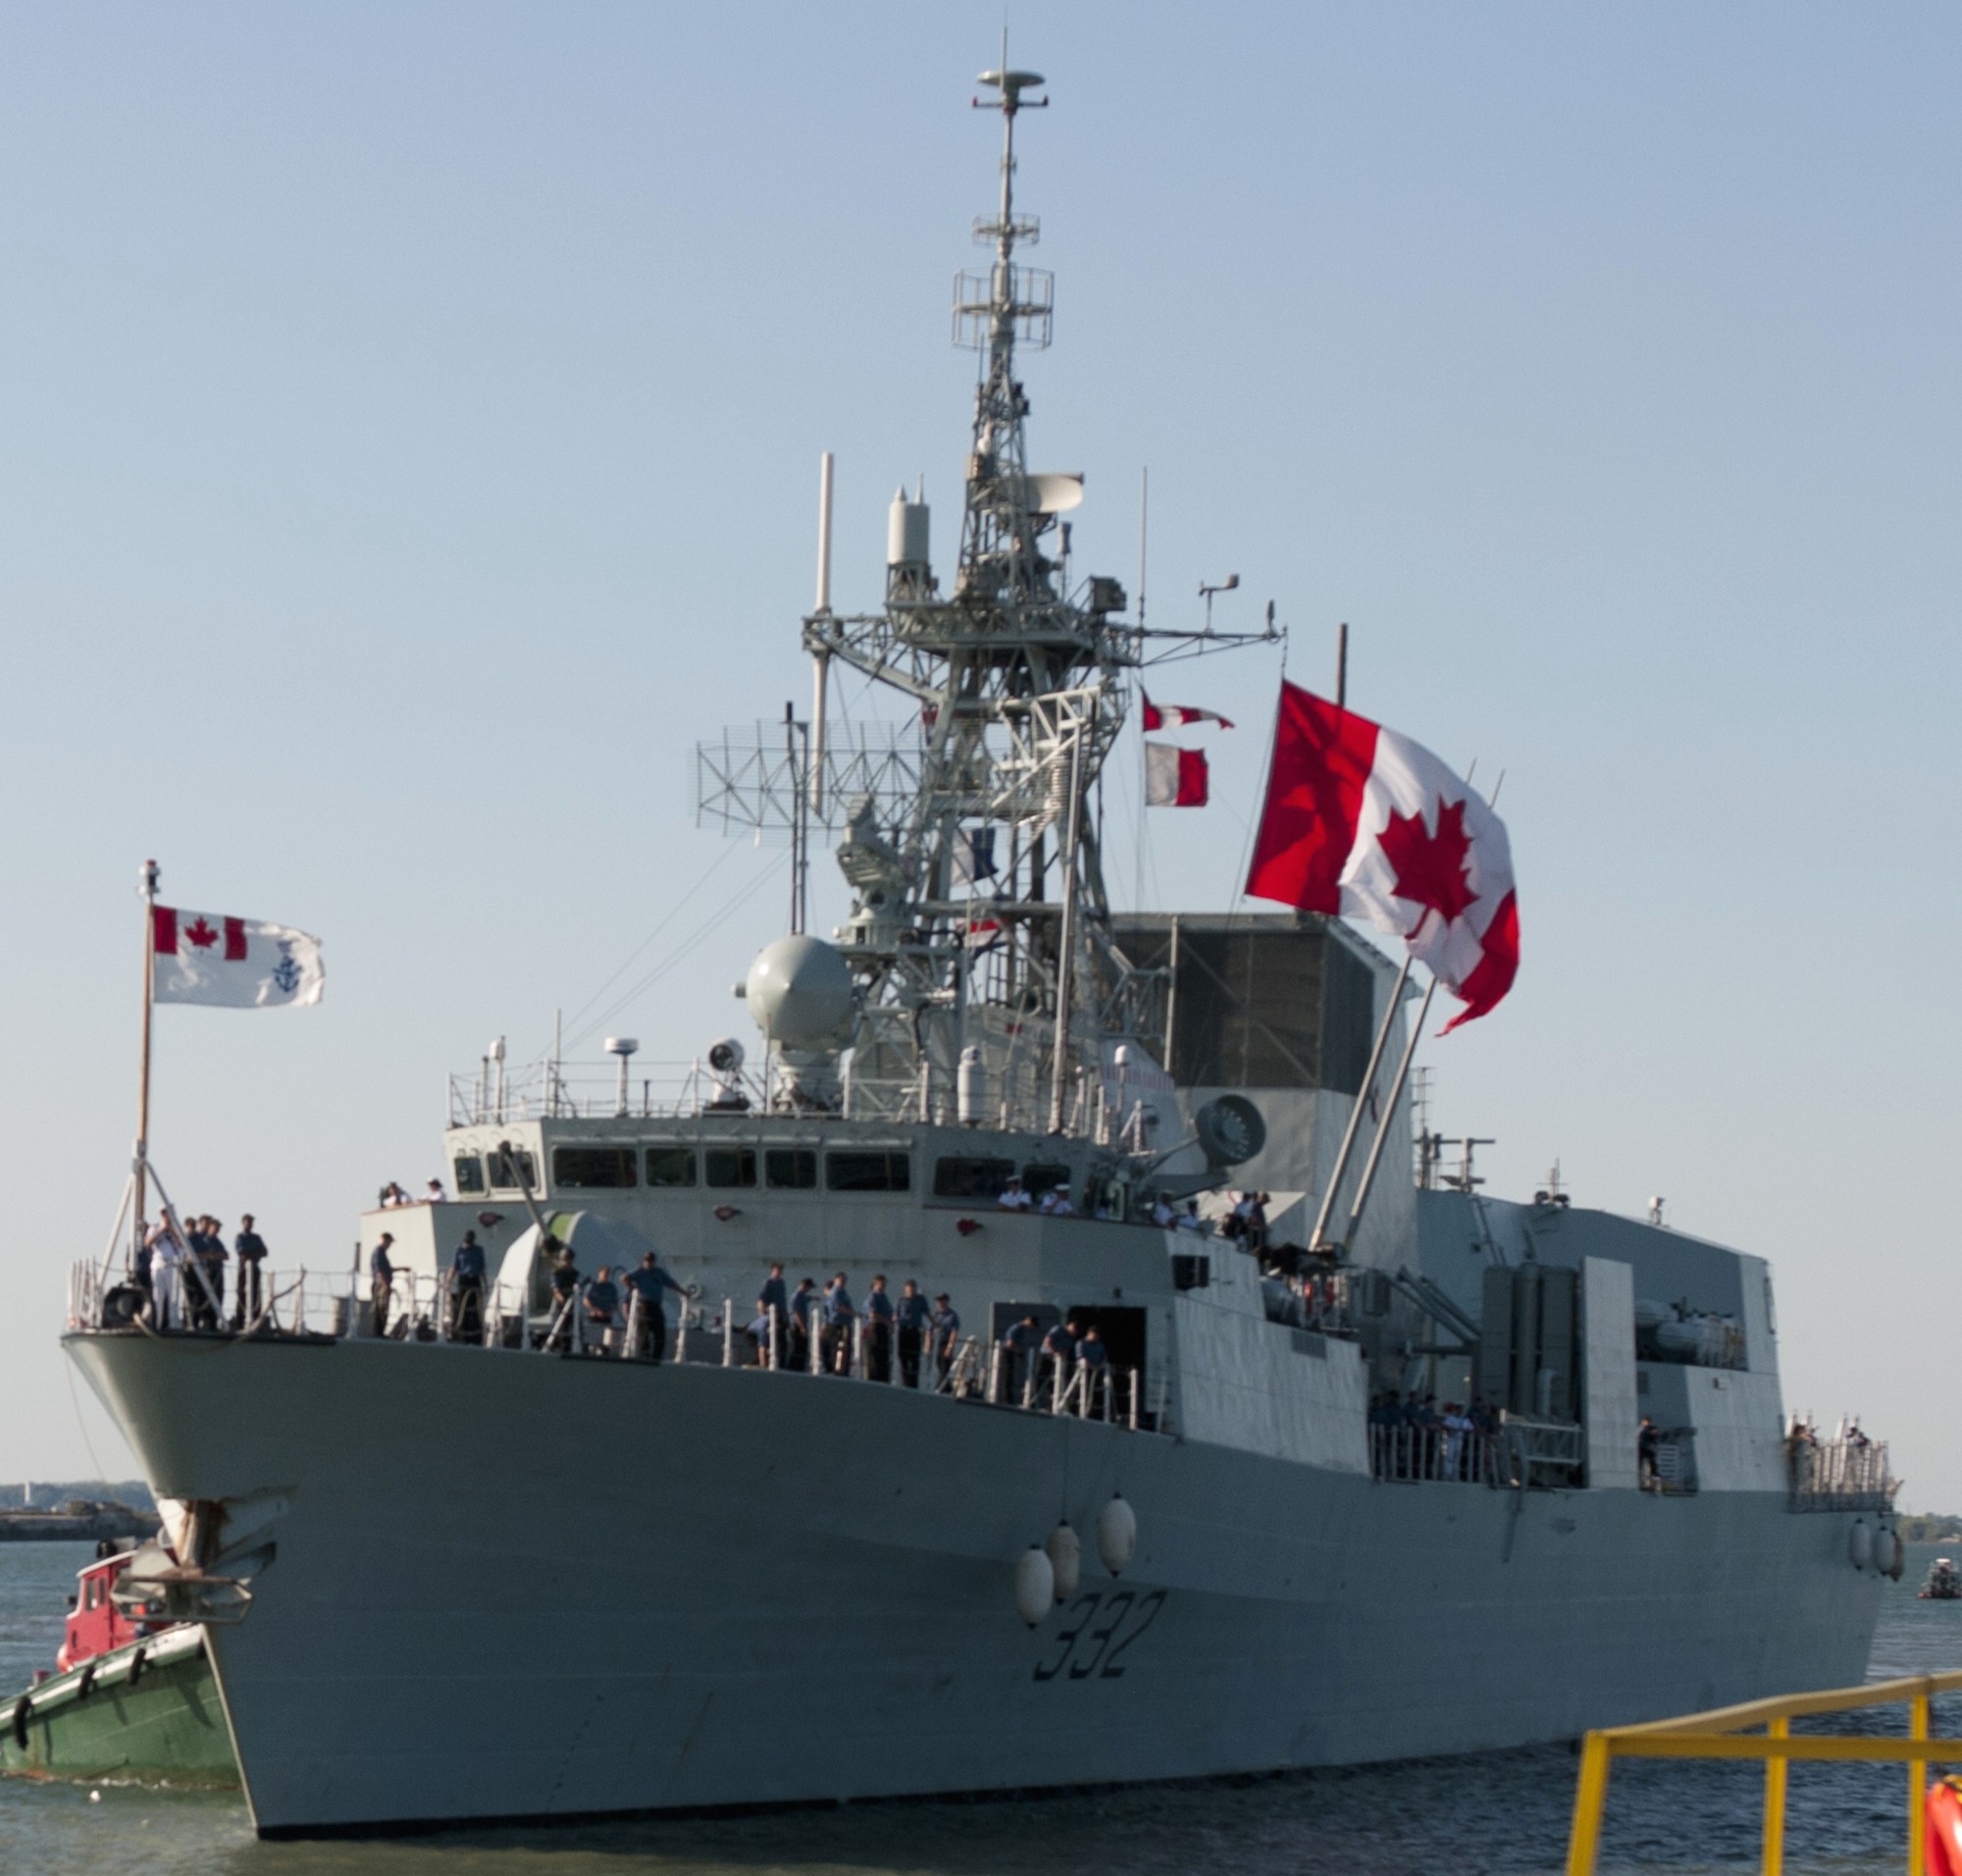 ffh-332 hmcs ville de quebec halifax class helicopter patrol frigate ncsm royal canadian navy 05